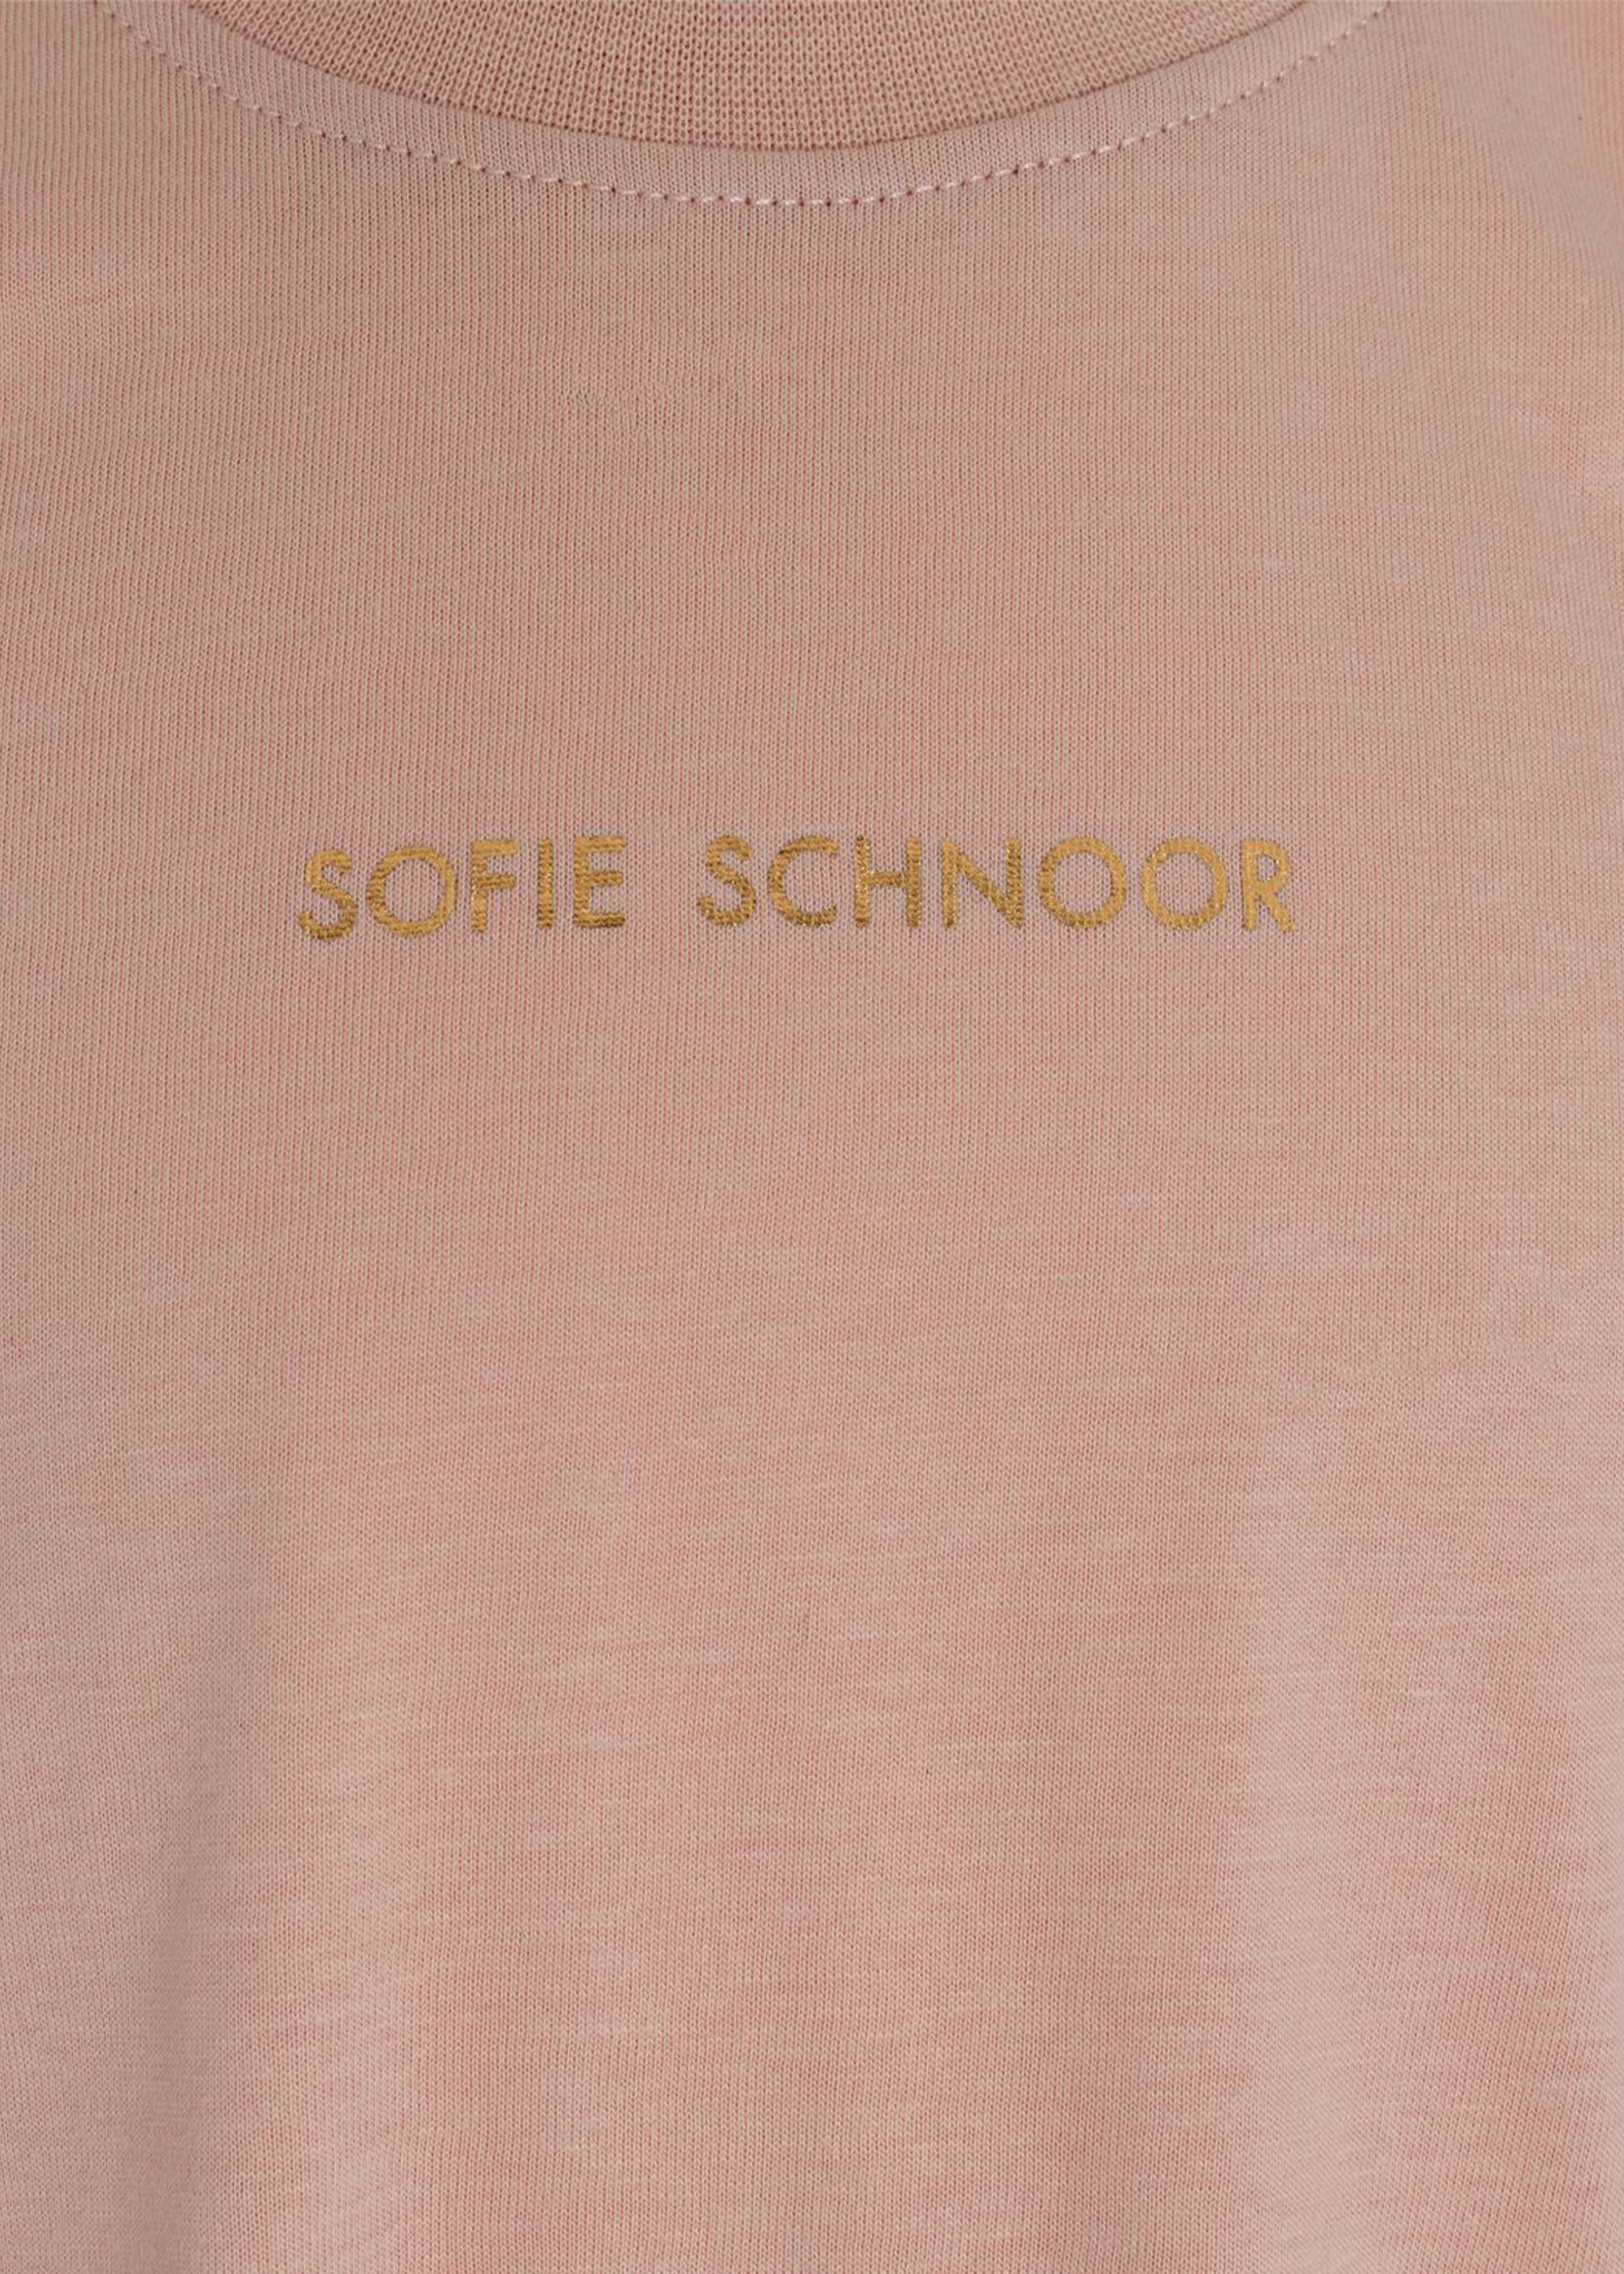 Sofie Schnoor T-Shirt NOS Rose